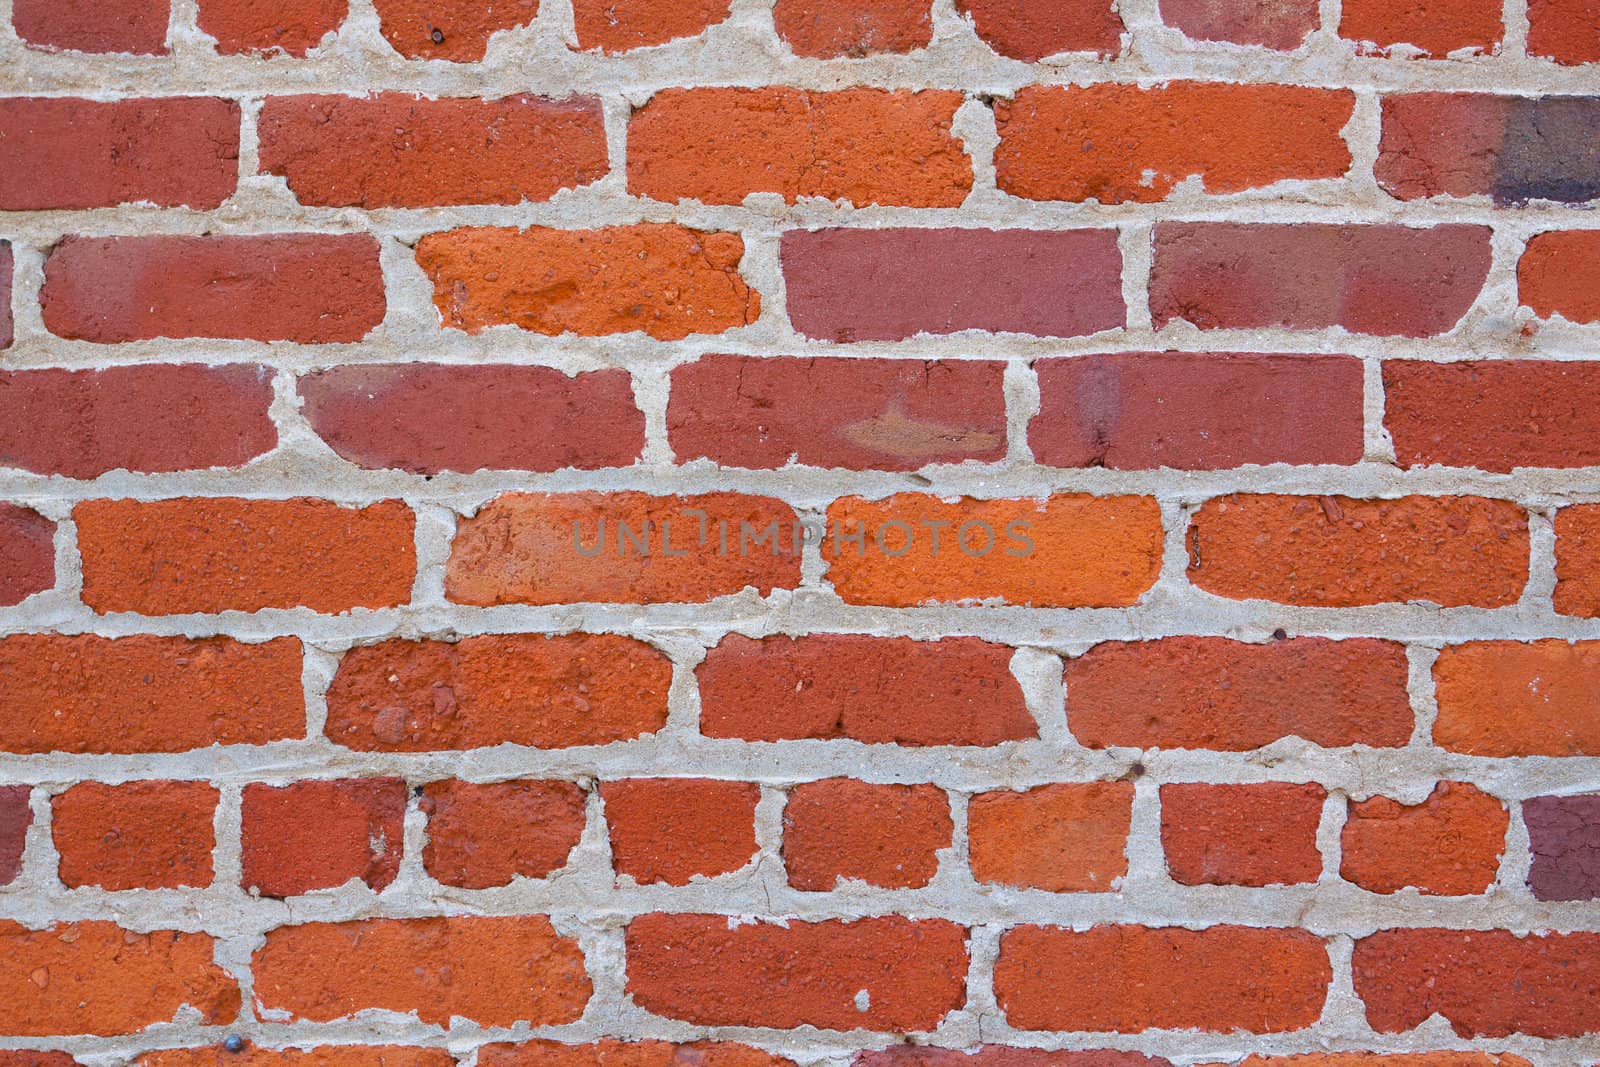 Brick Wall by joshuaraineyphotography